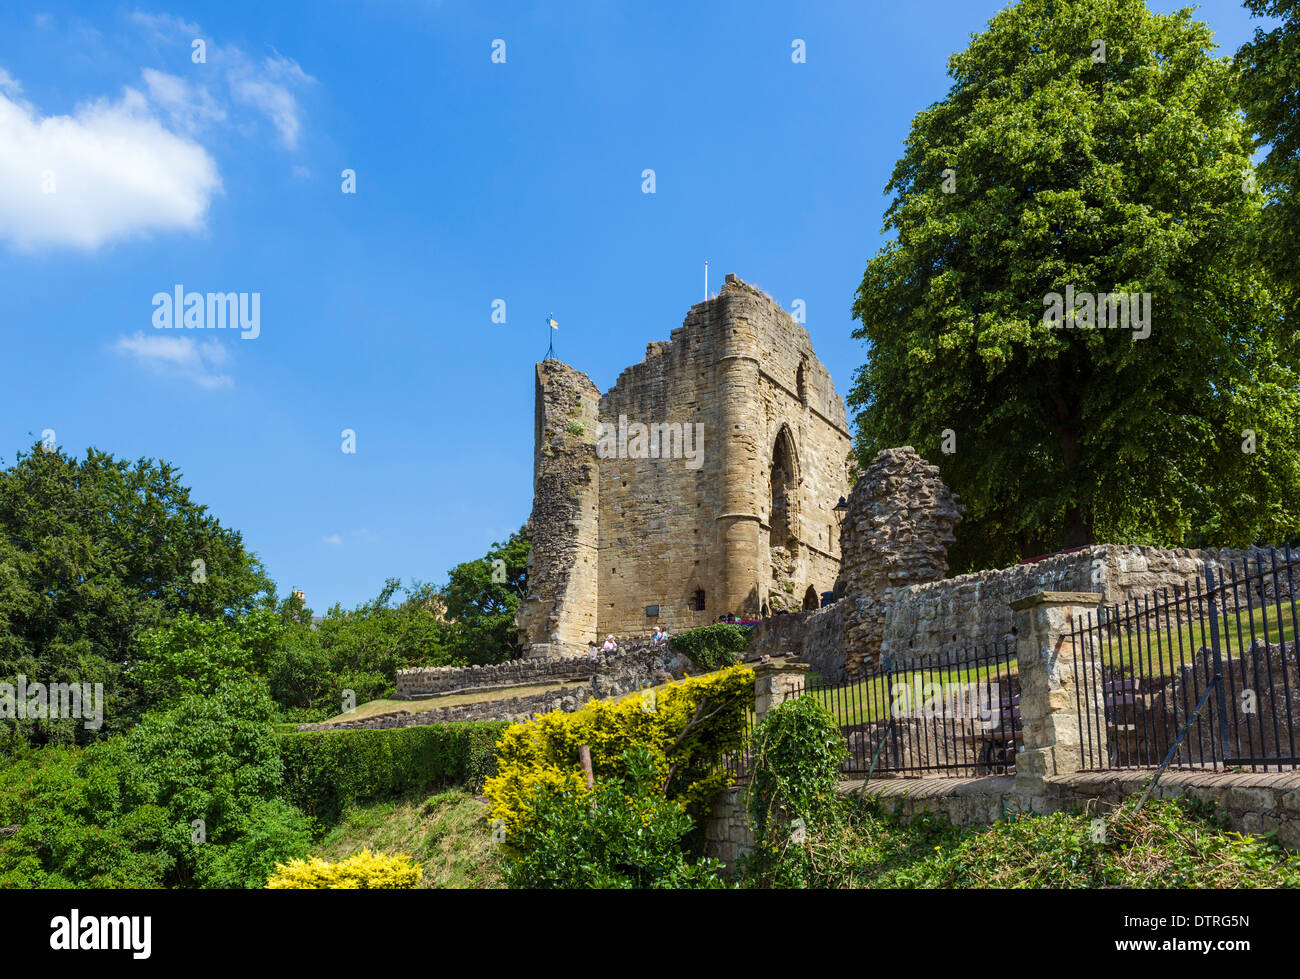 Les ruines de château de Knaresborough, Knaresborough, North Yorkshire, England, UK Banque D'Images